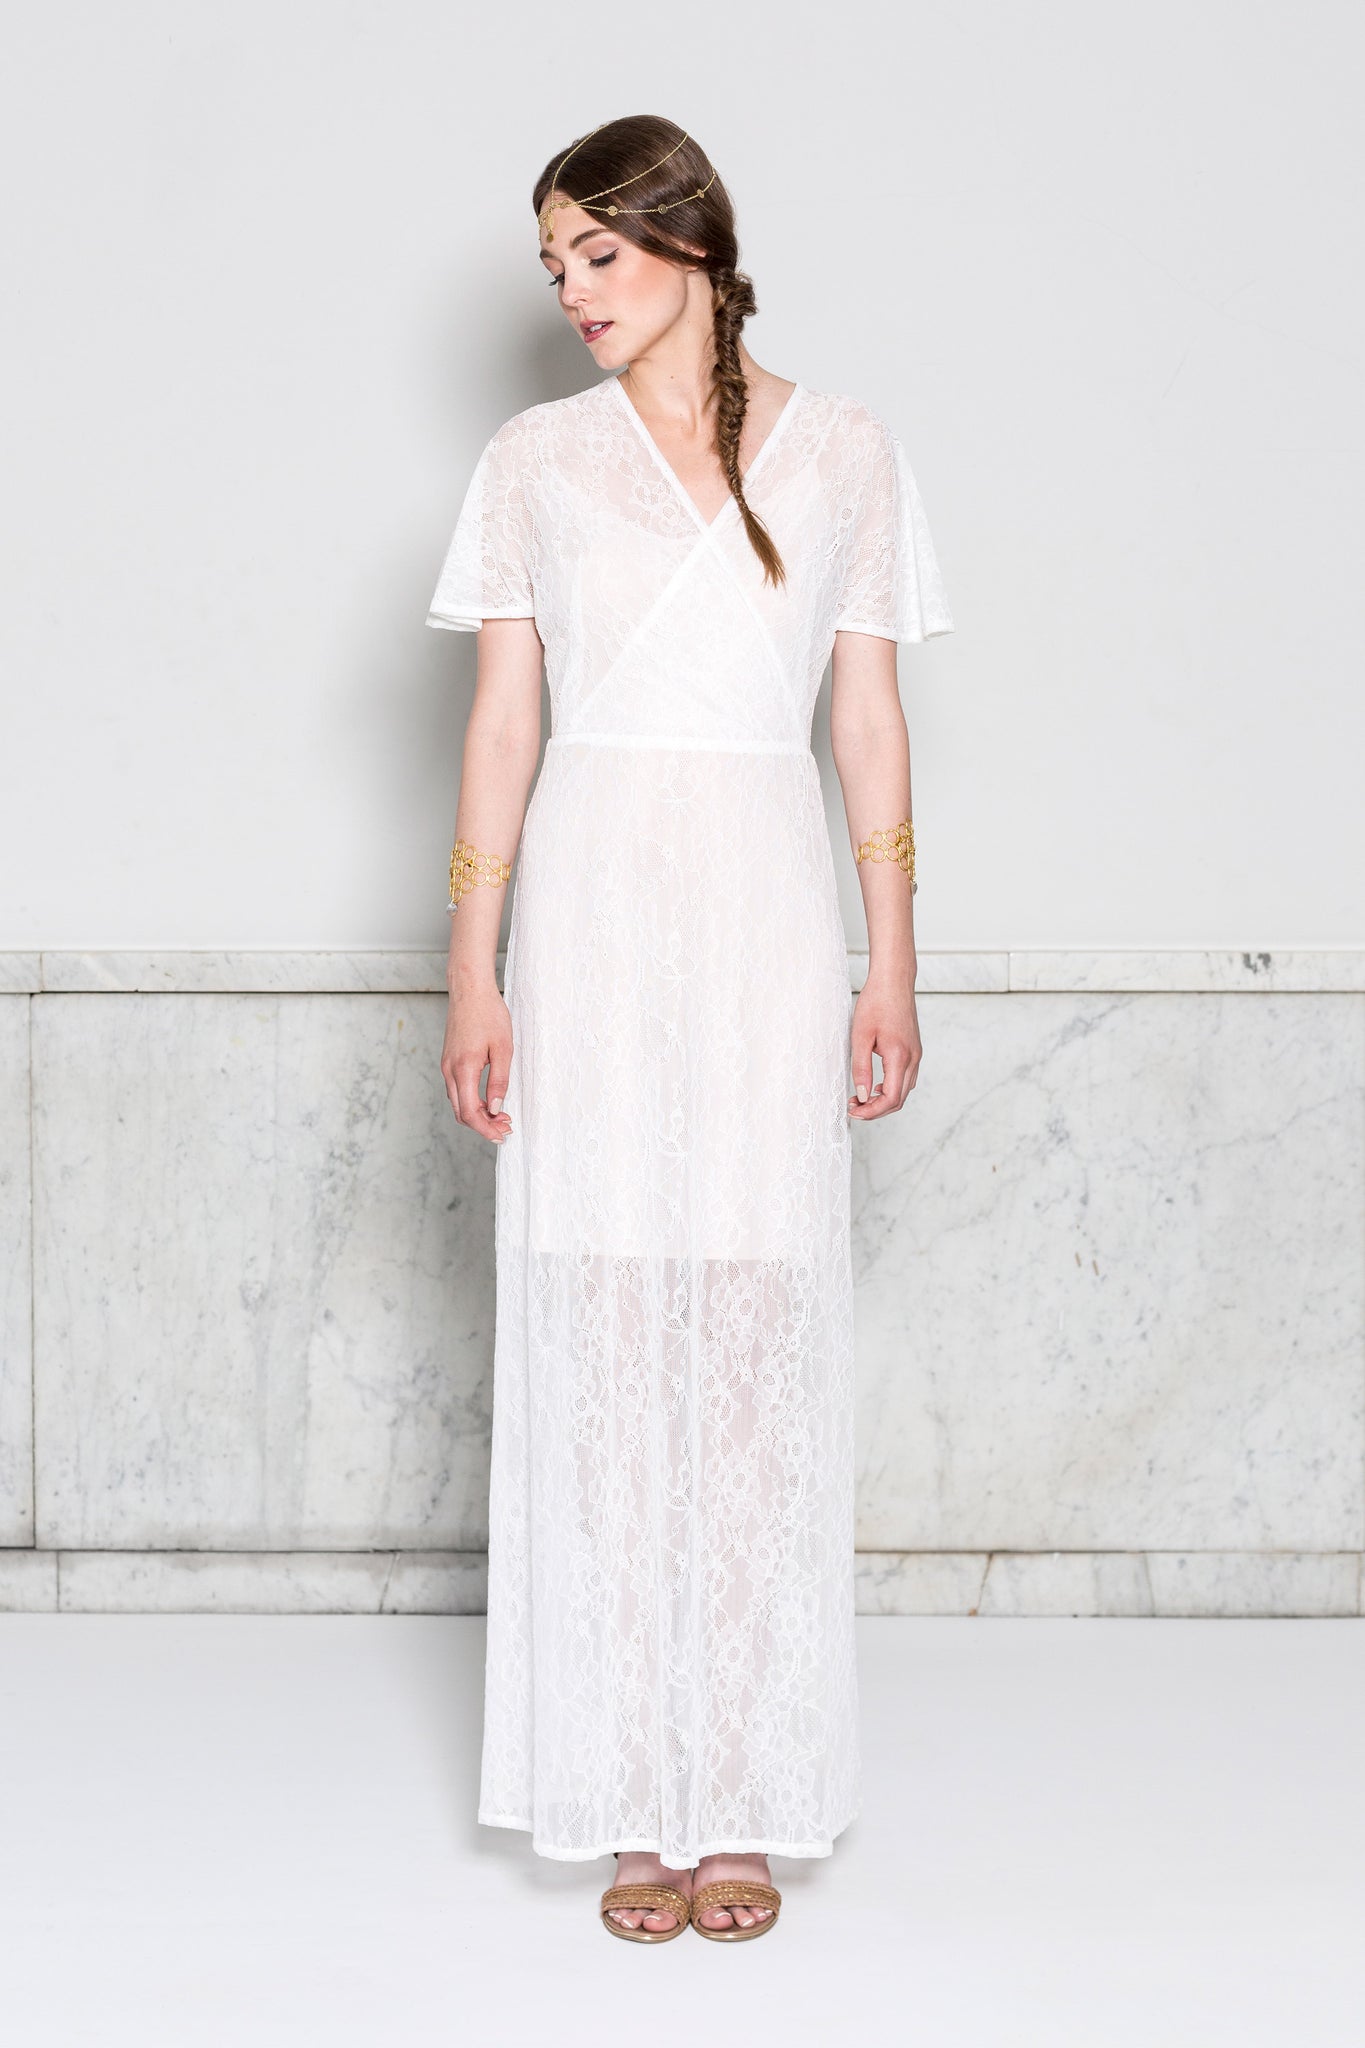 White Onyx Dress (Custom Design)